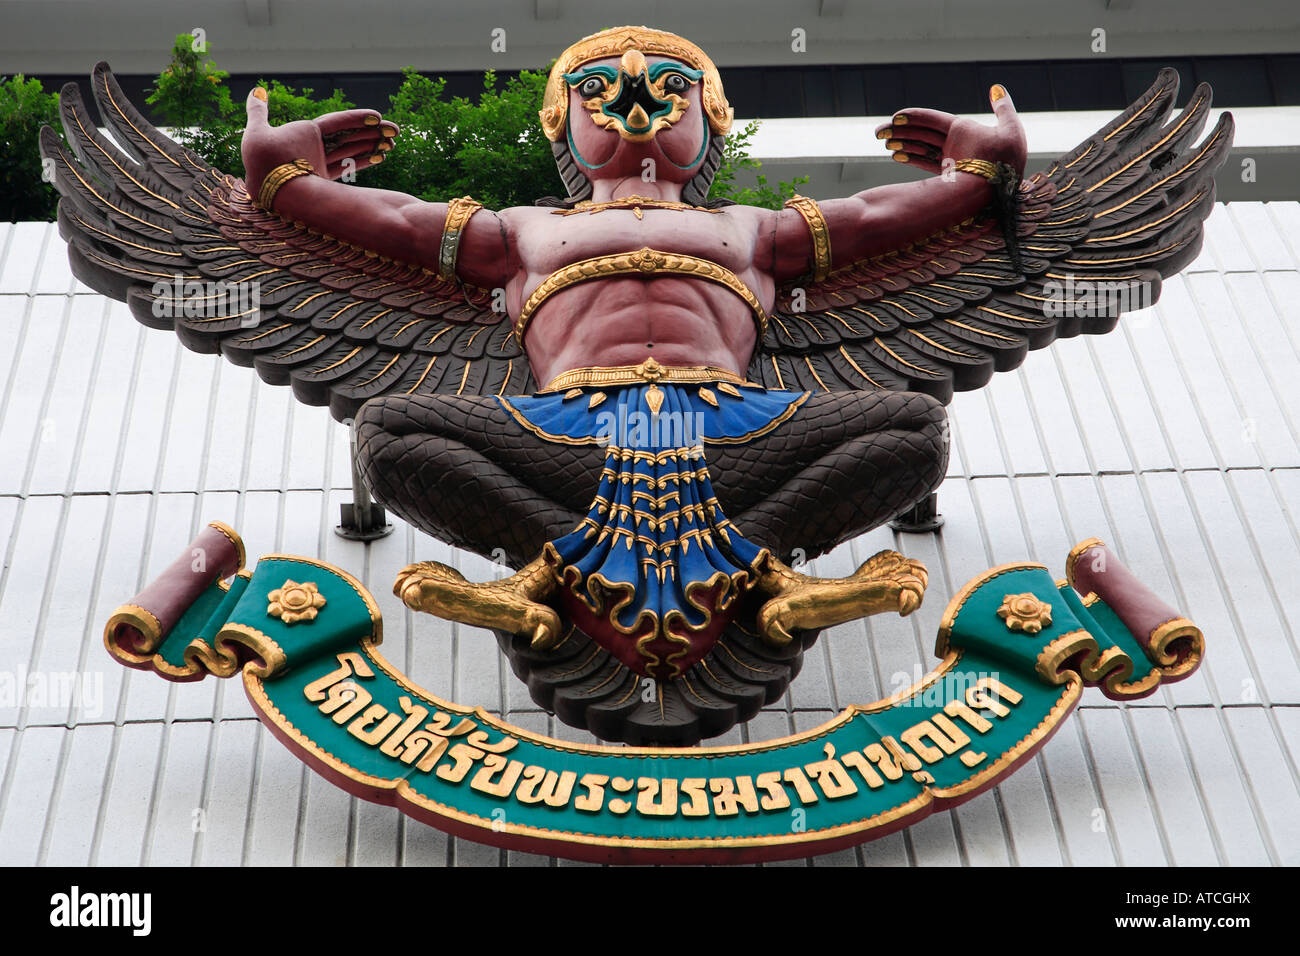 thailand-bangkok-bird-god-garuda-statue-ATCGHX.jpg